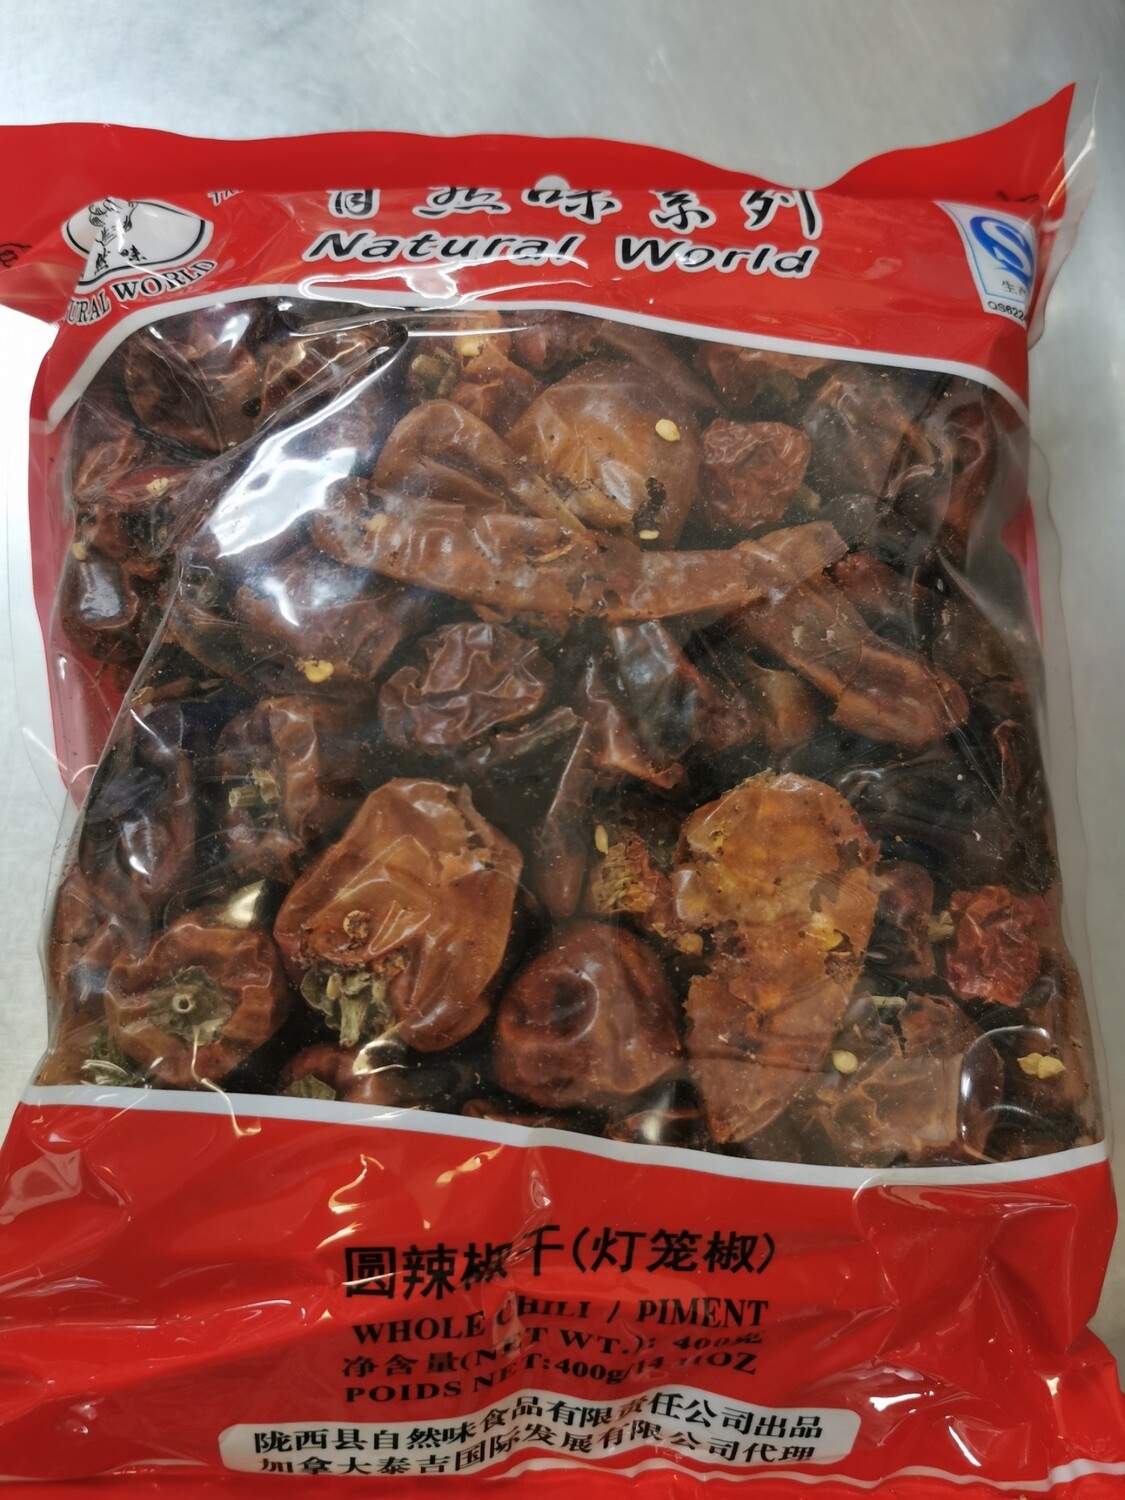 Whole Chili (400g) / 圆辣椒干 (灯笼椒)